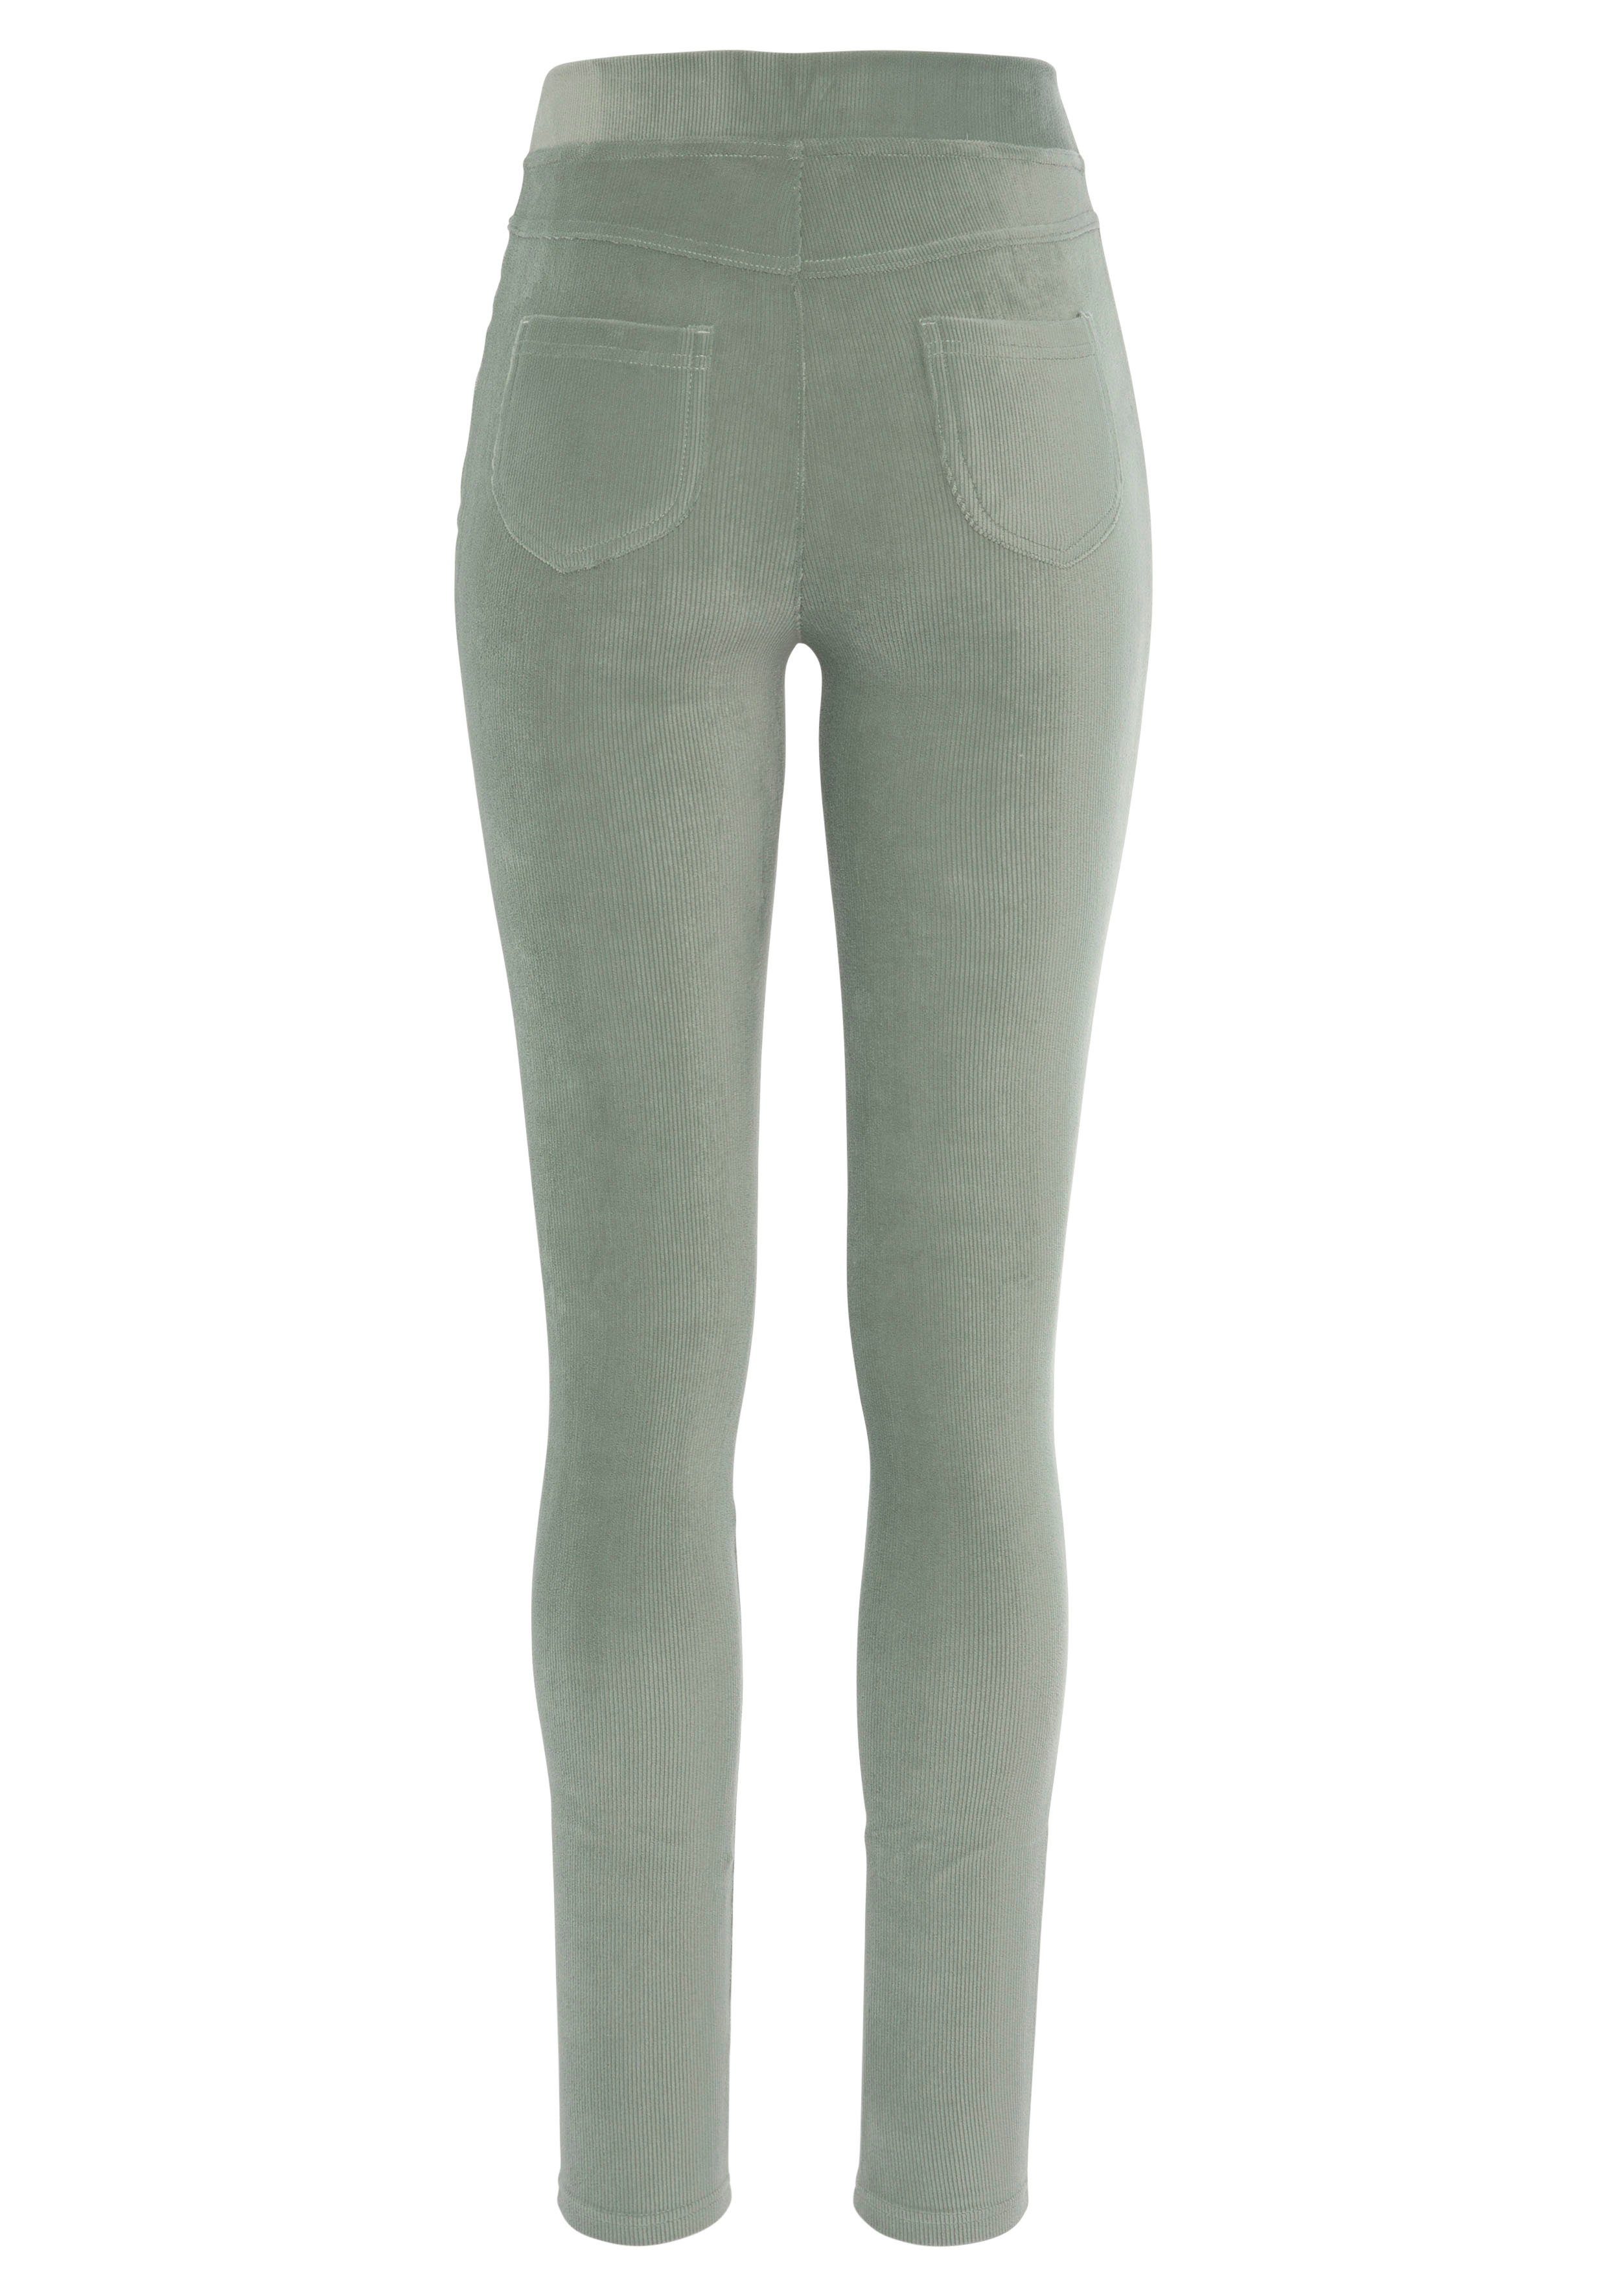 Material aus Leggings LASCANA Cord-Optik, in Loungewear grün mint weichem